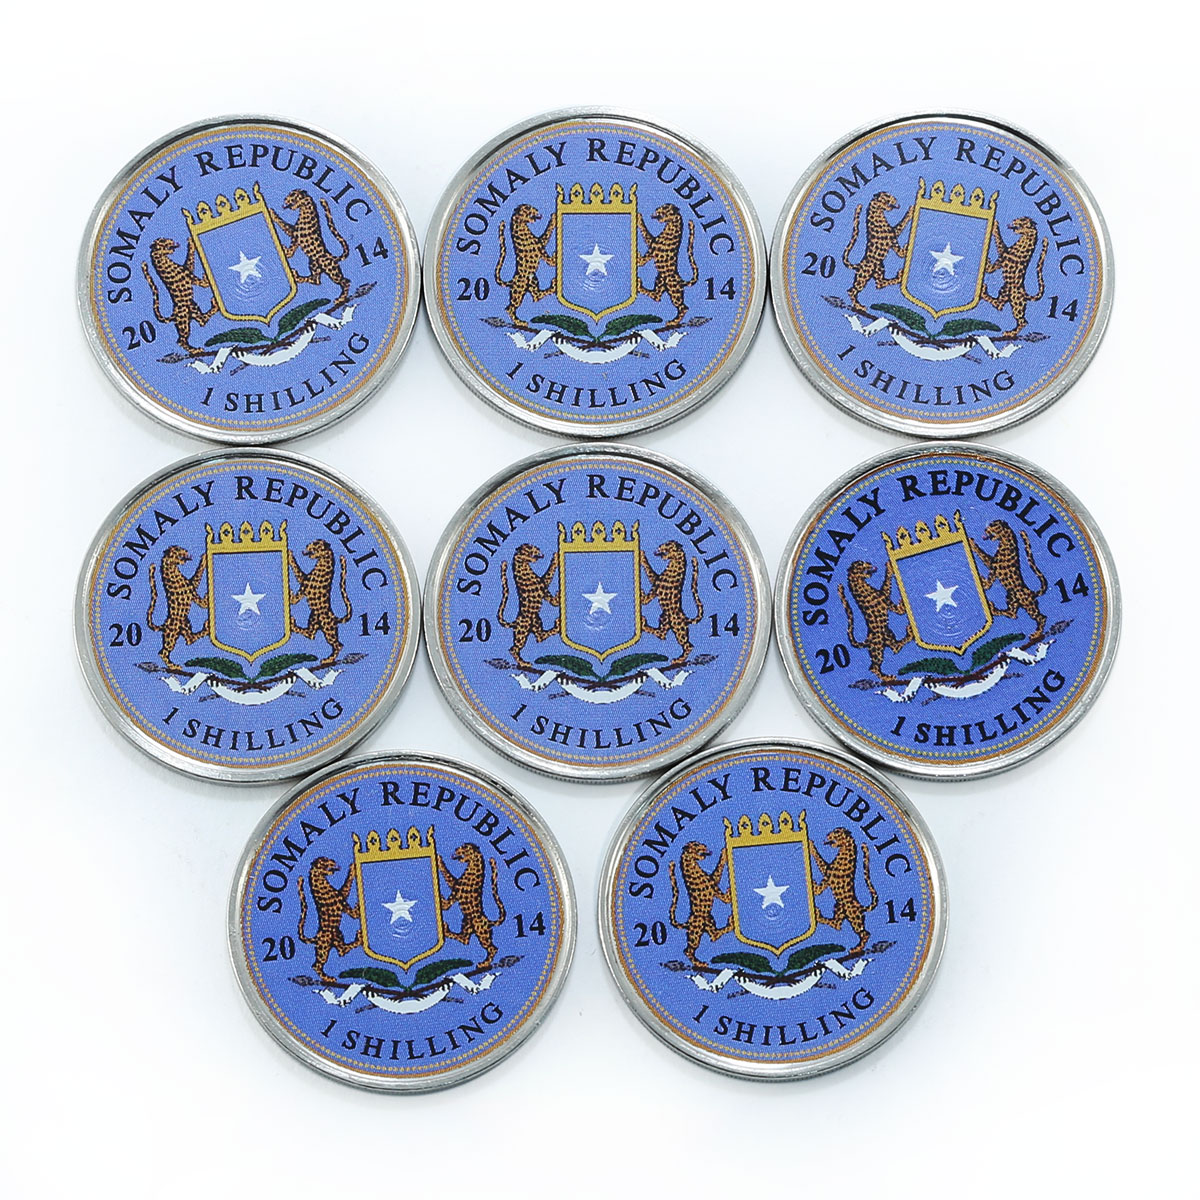 Somalia set of 16 coins Ships Sailboats colorized souvenir set 2014